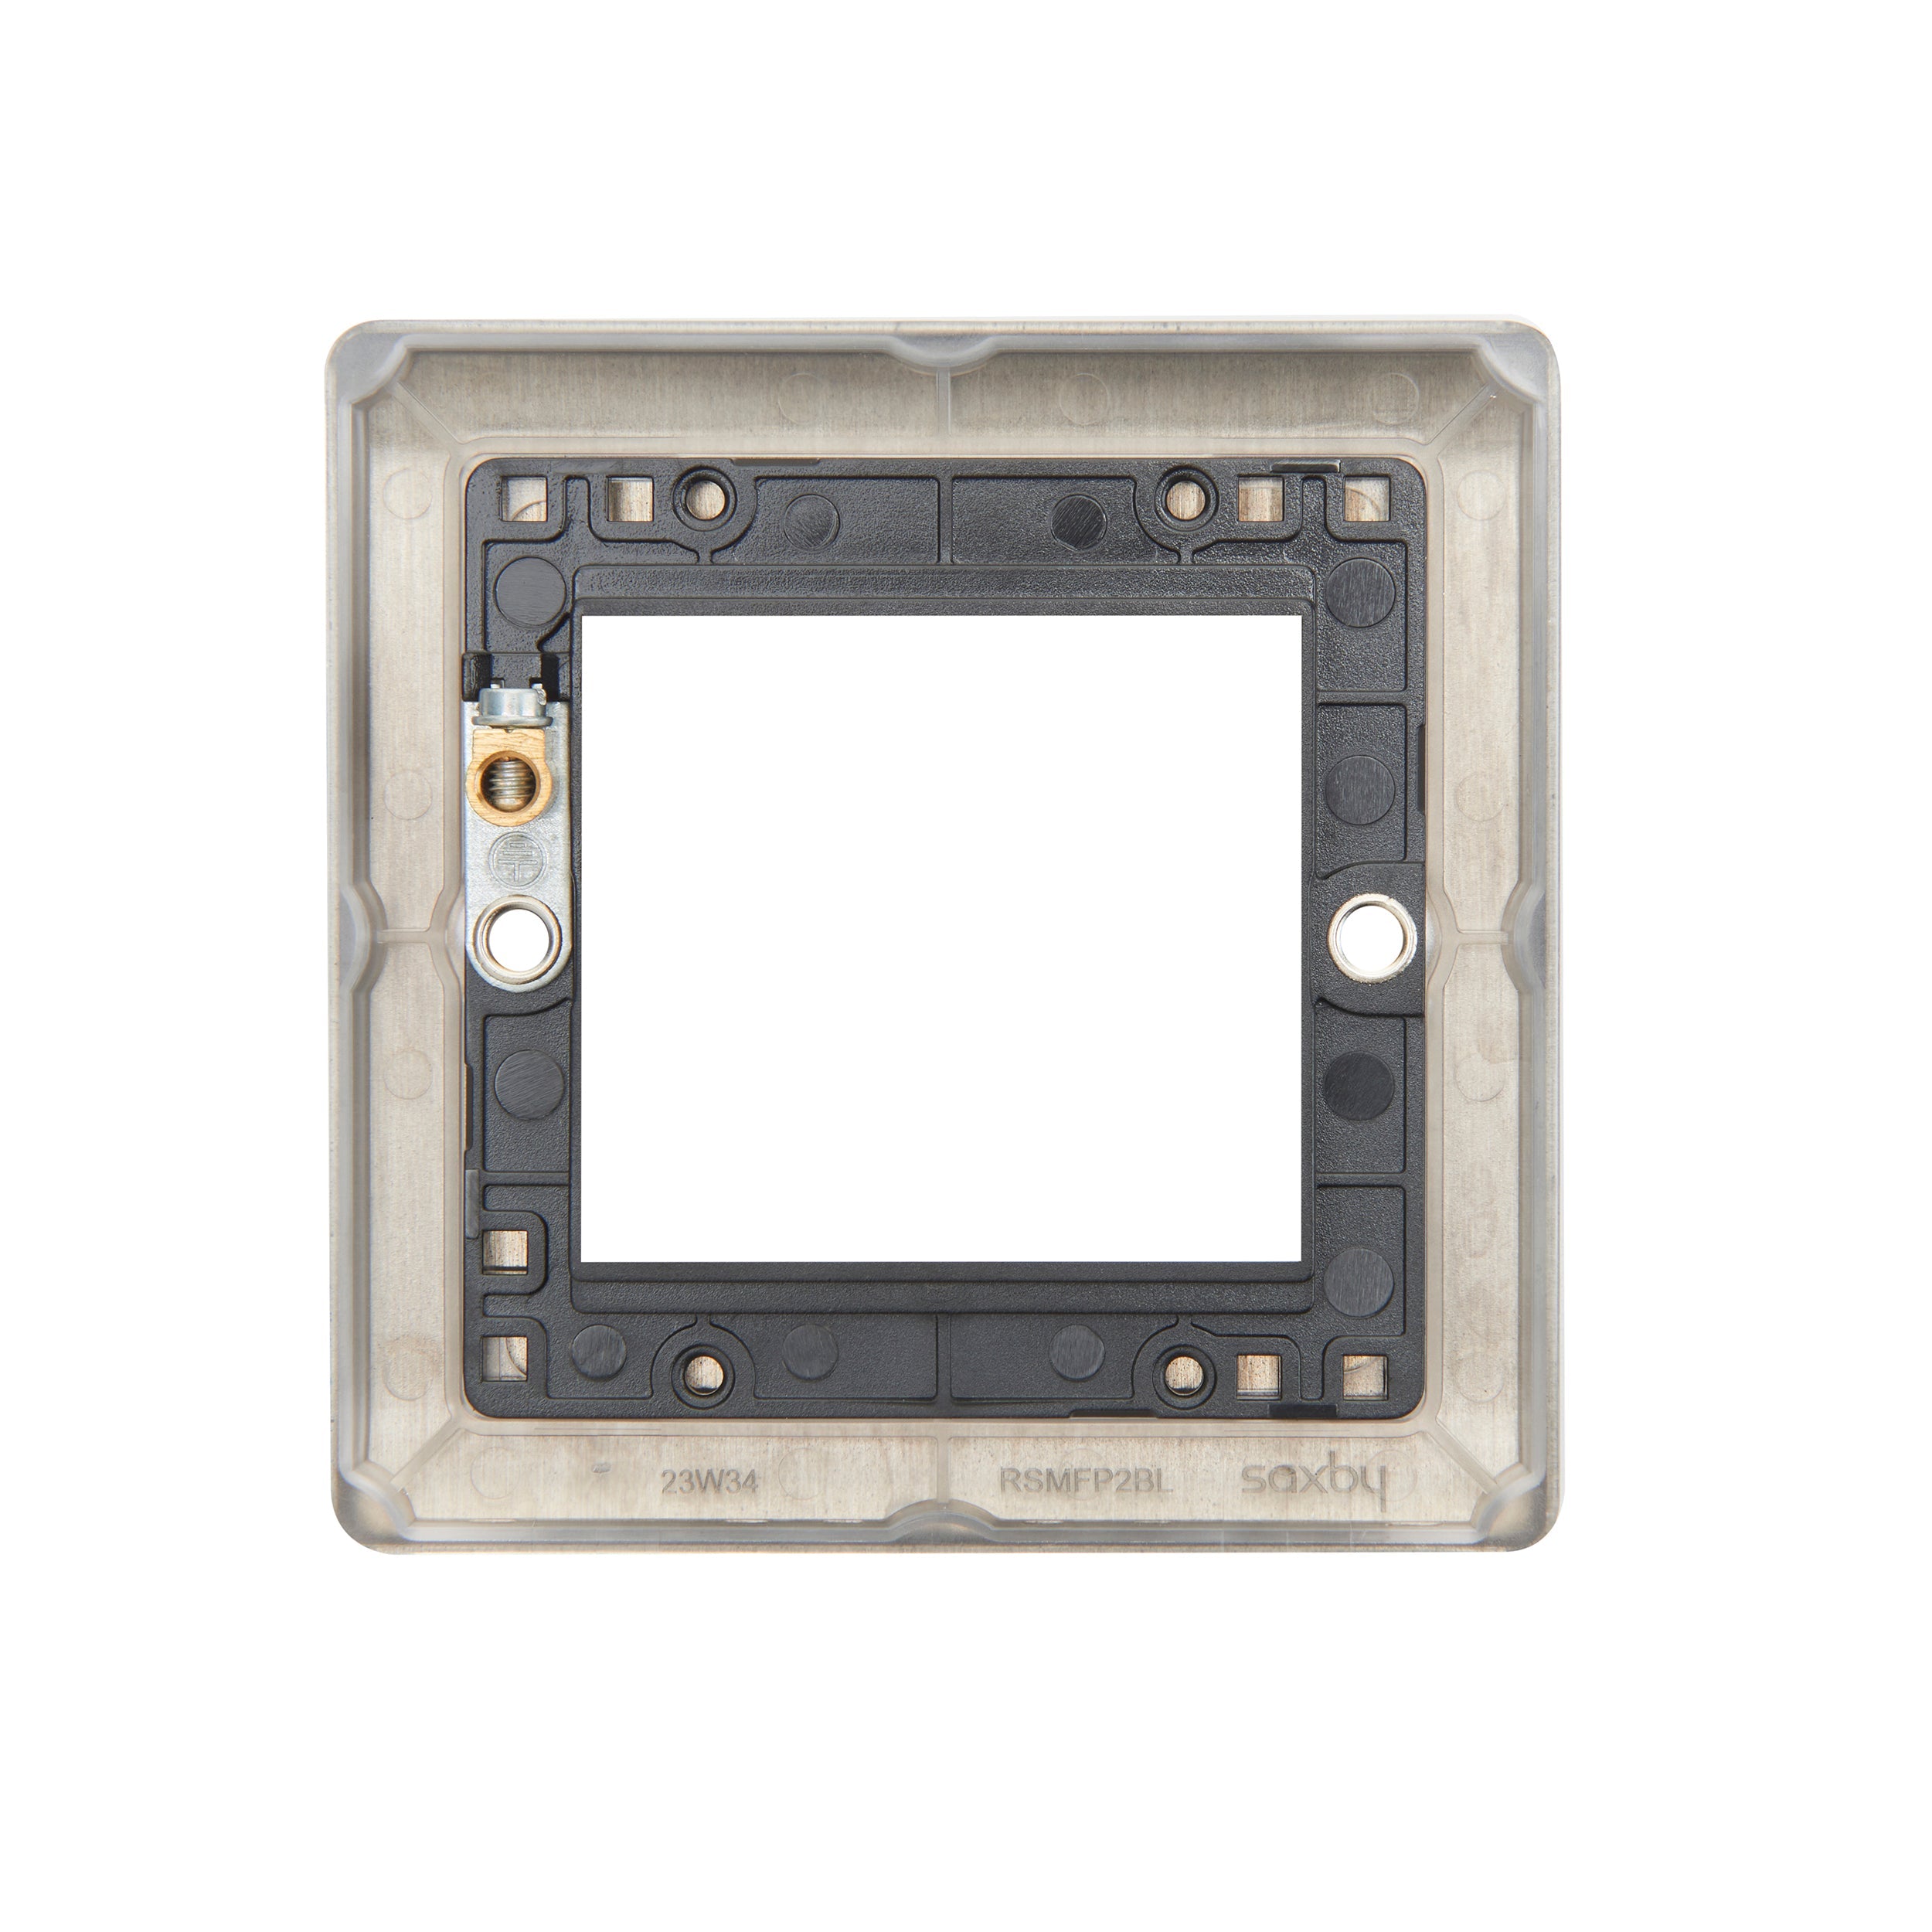 Saxby Raised Screwed 2G Modular Faceplate (2 Modules) - Matt Black RSMFP2BL